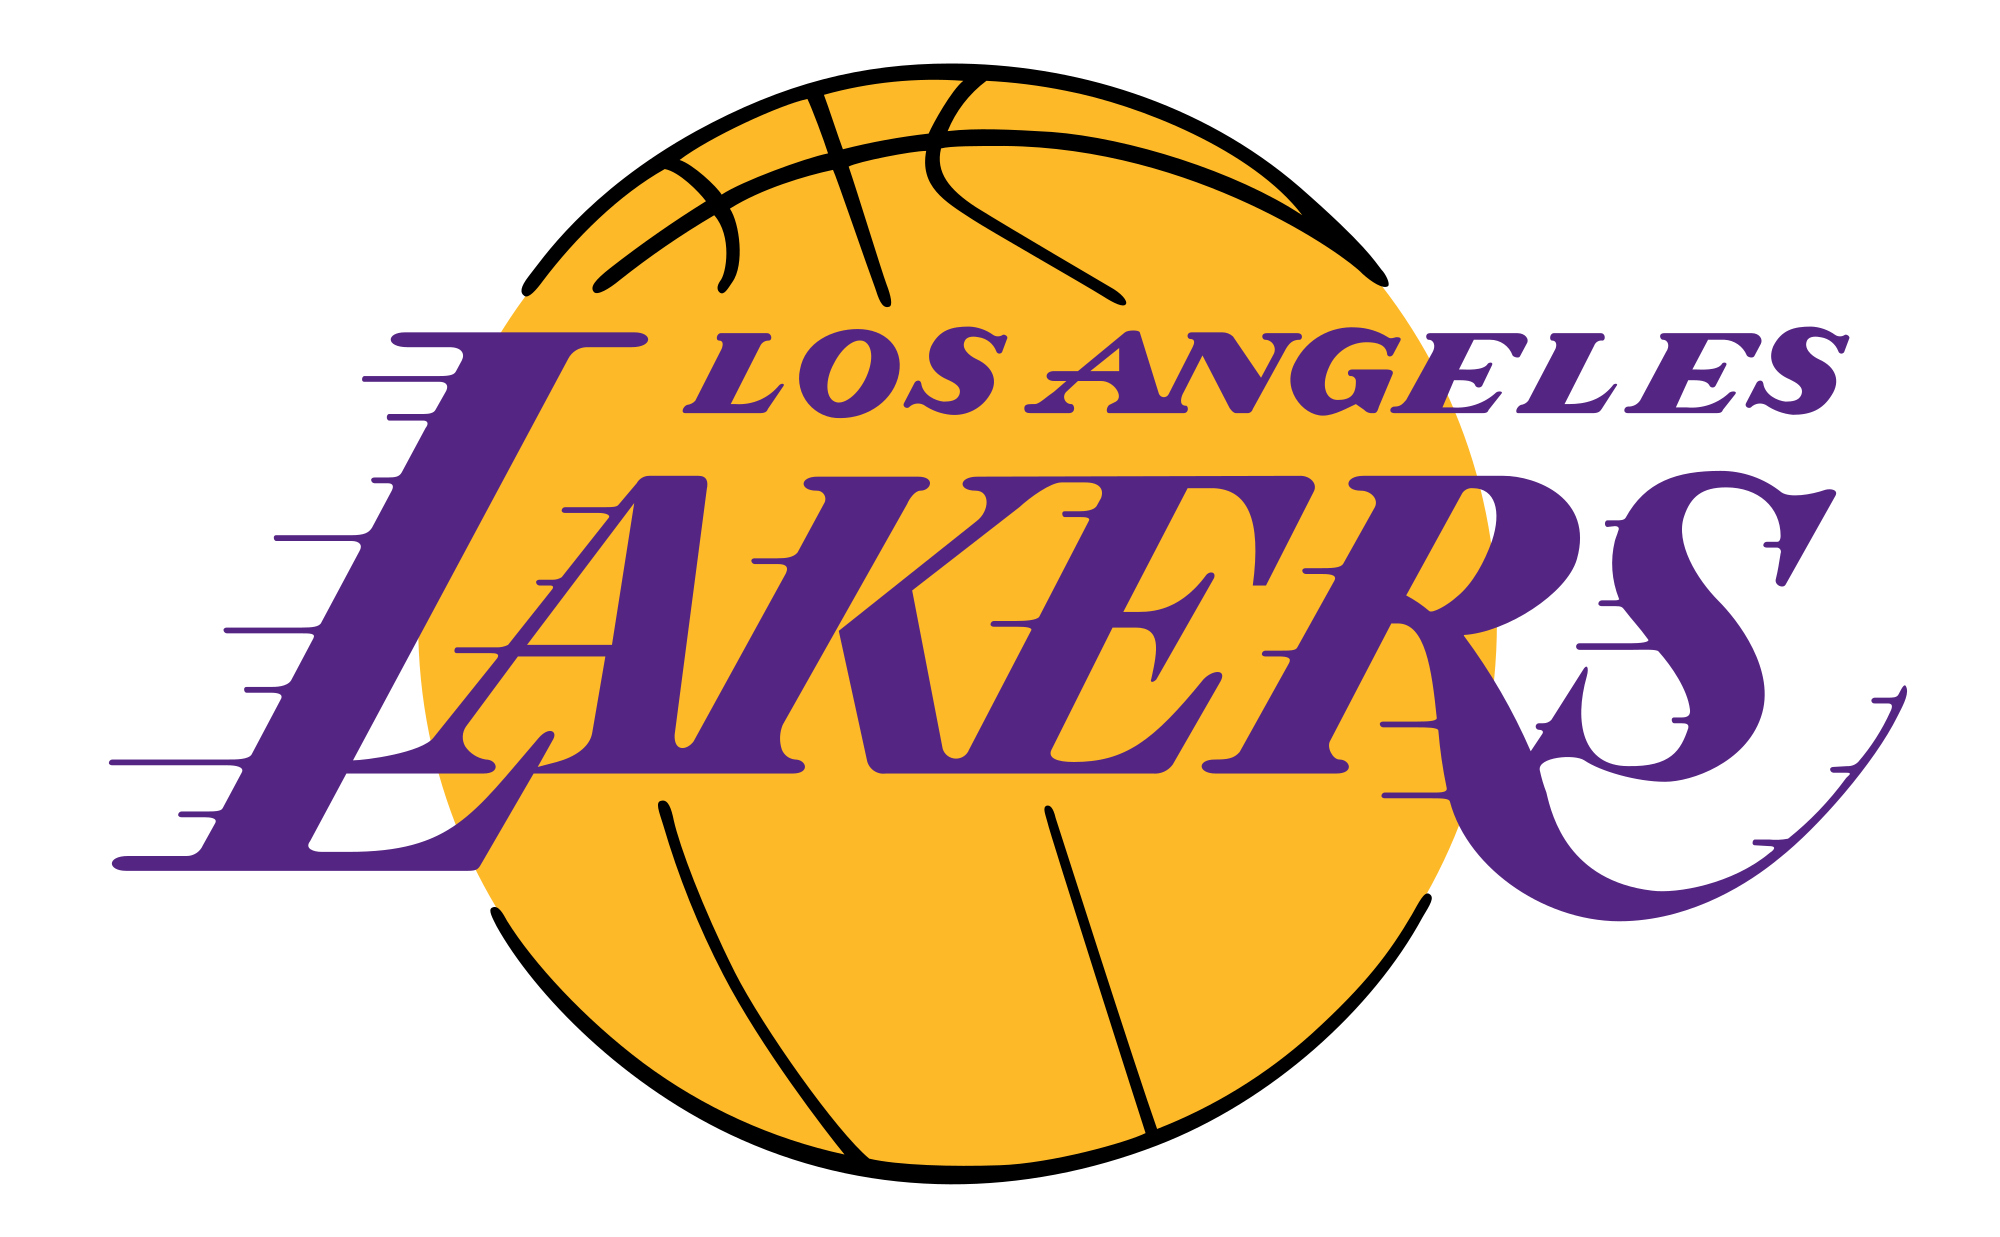 C3 Customer - Los Angeles Lakers